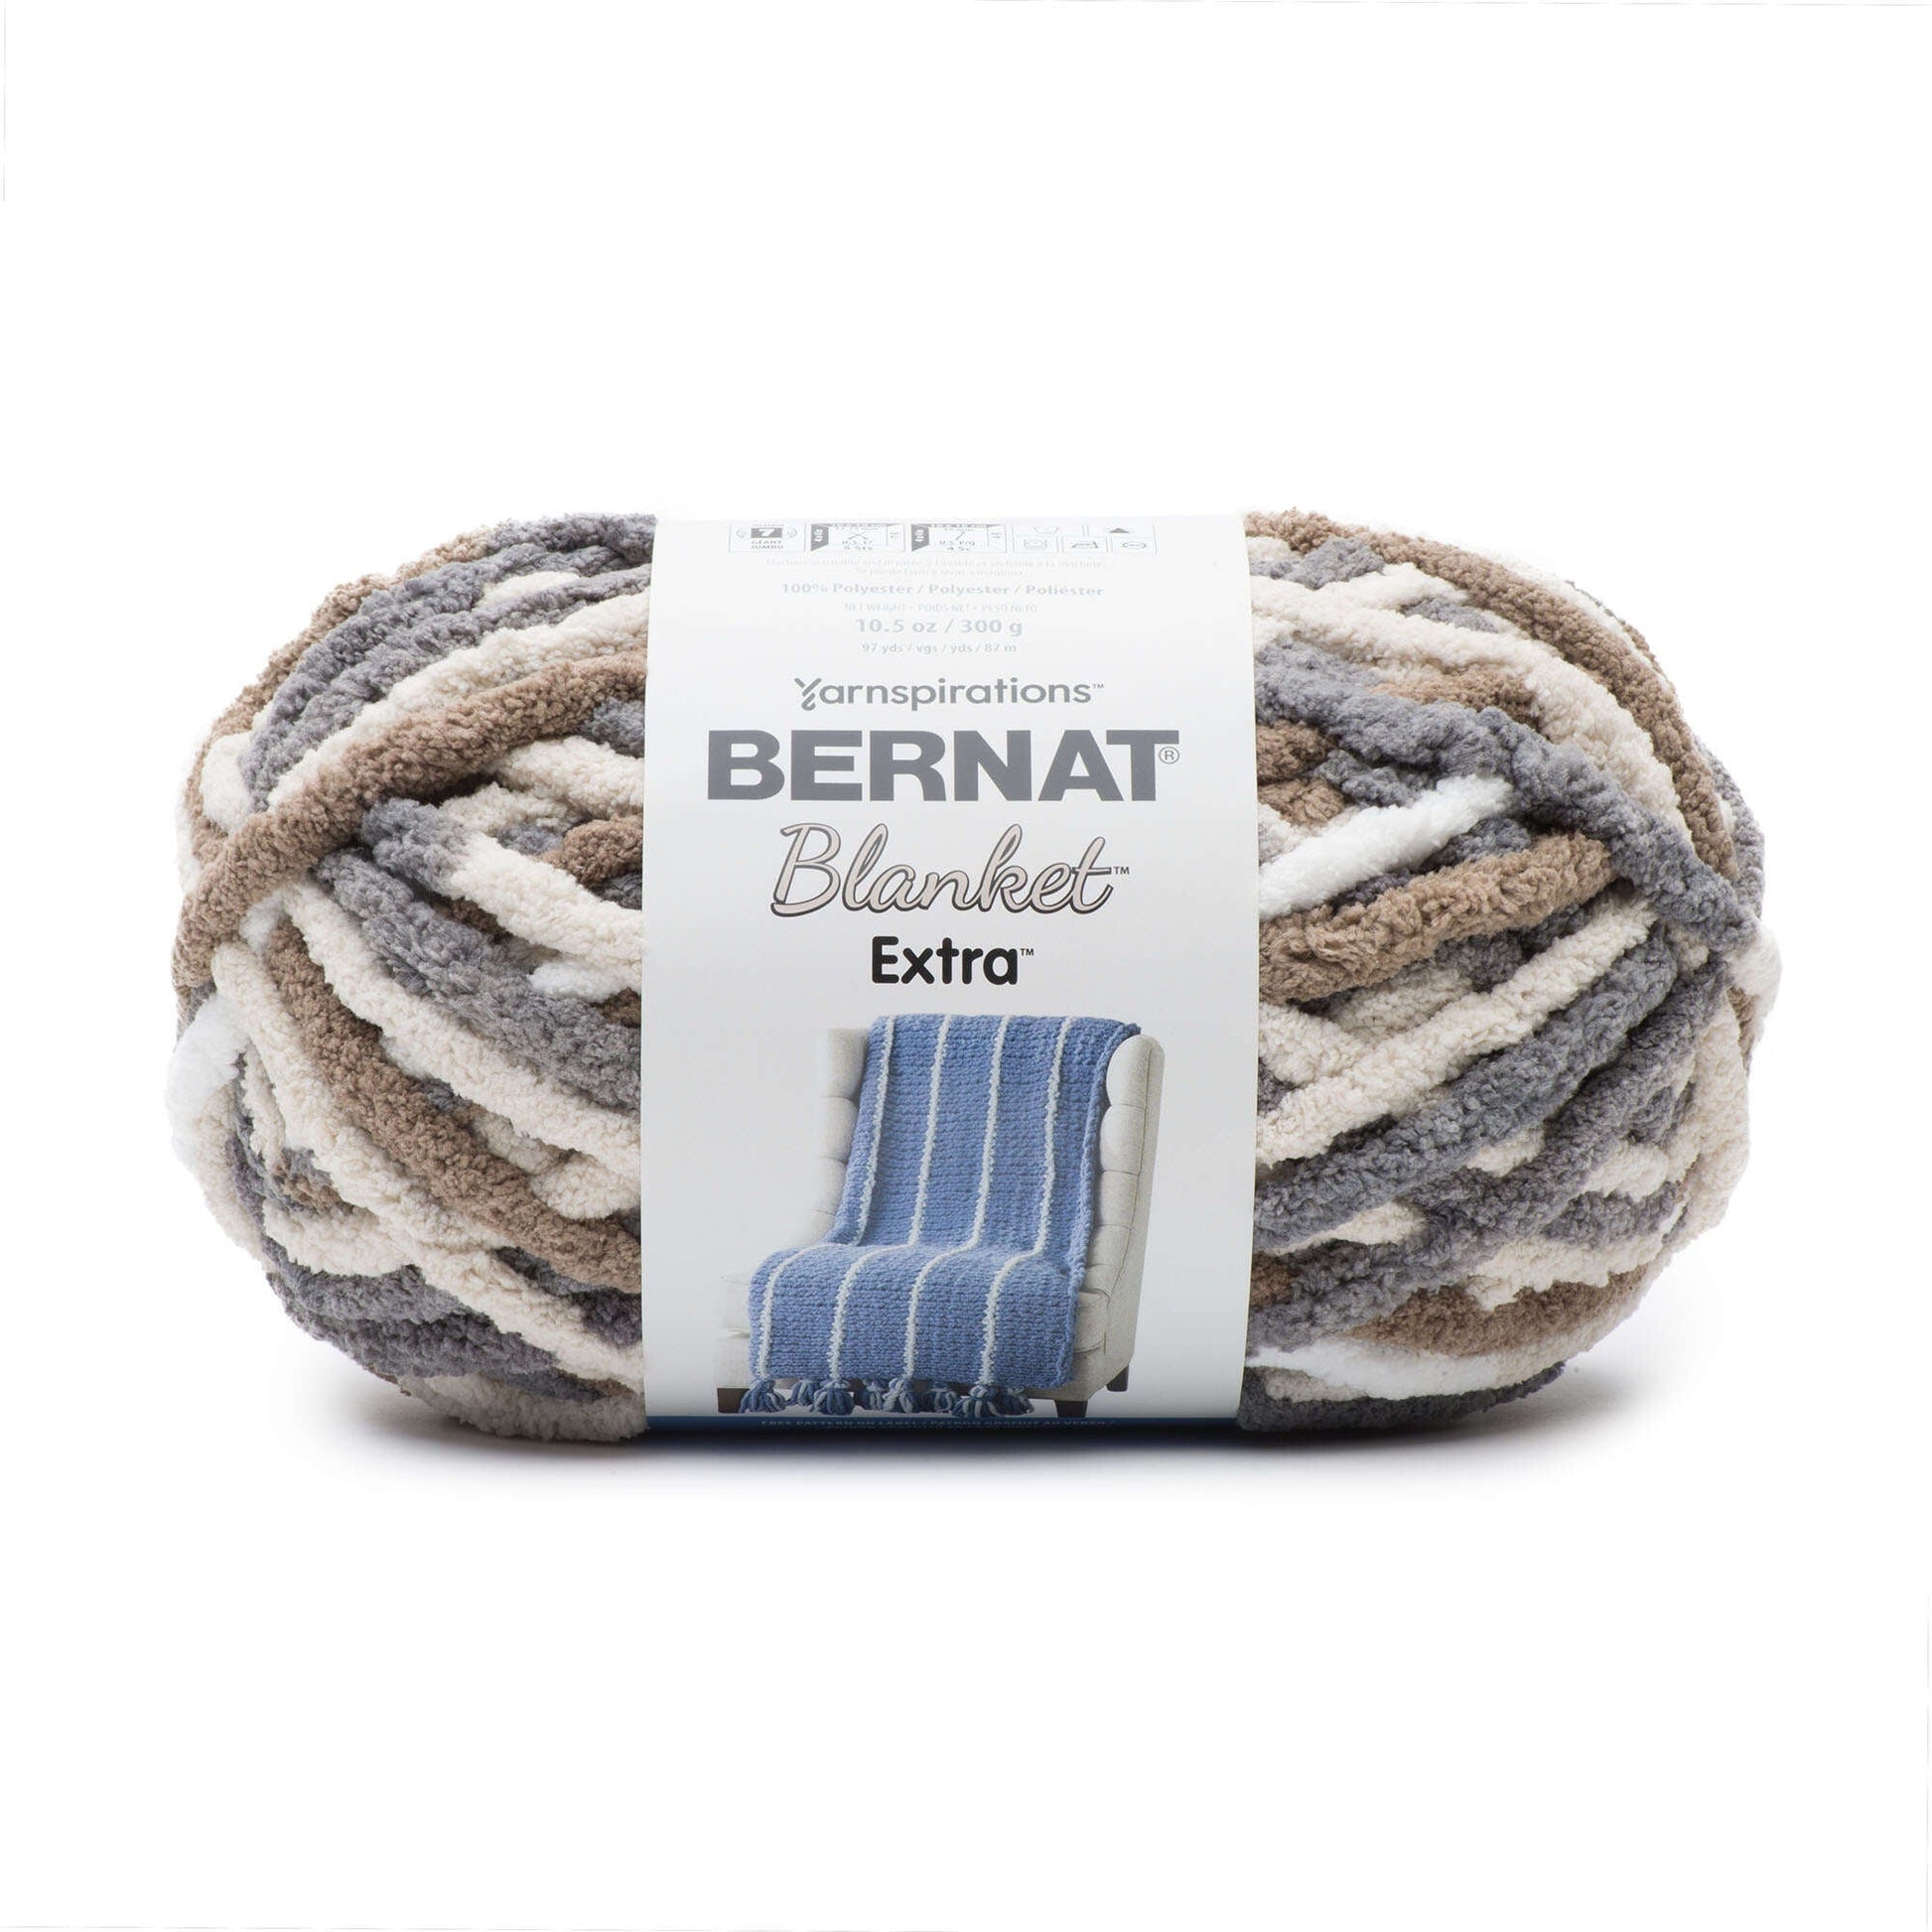 Bernat Blanket Extra Yarn (300g/10.5oz) - Clearance Shades* Mushroom Mix